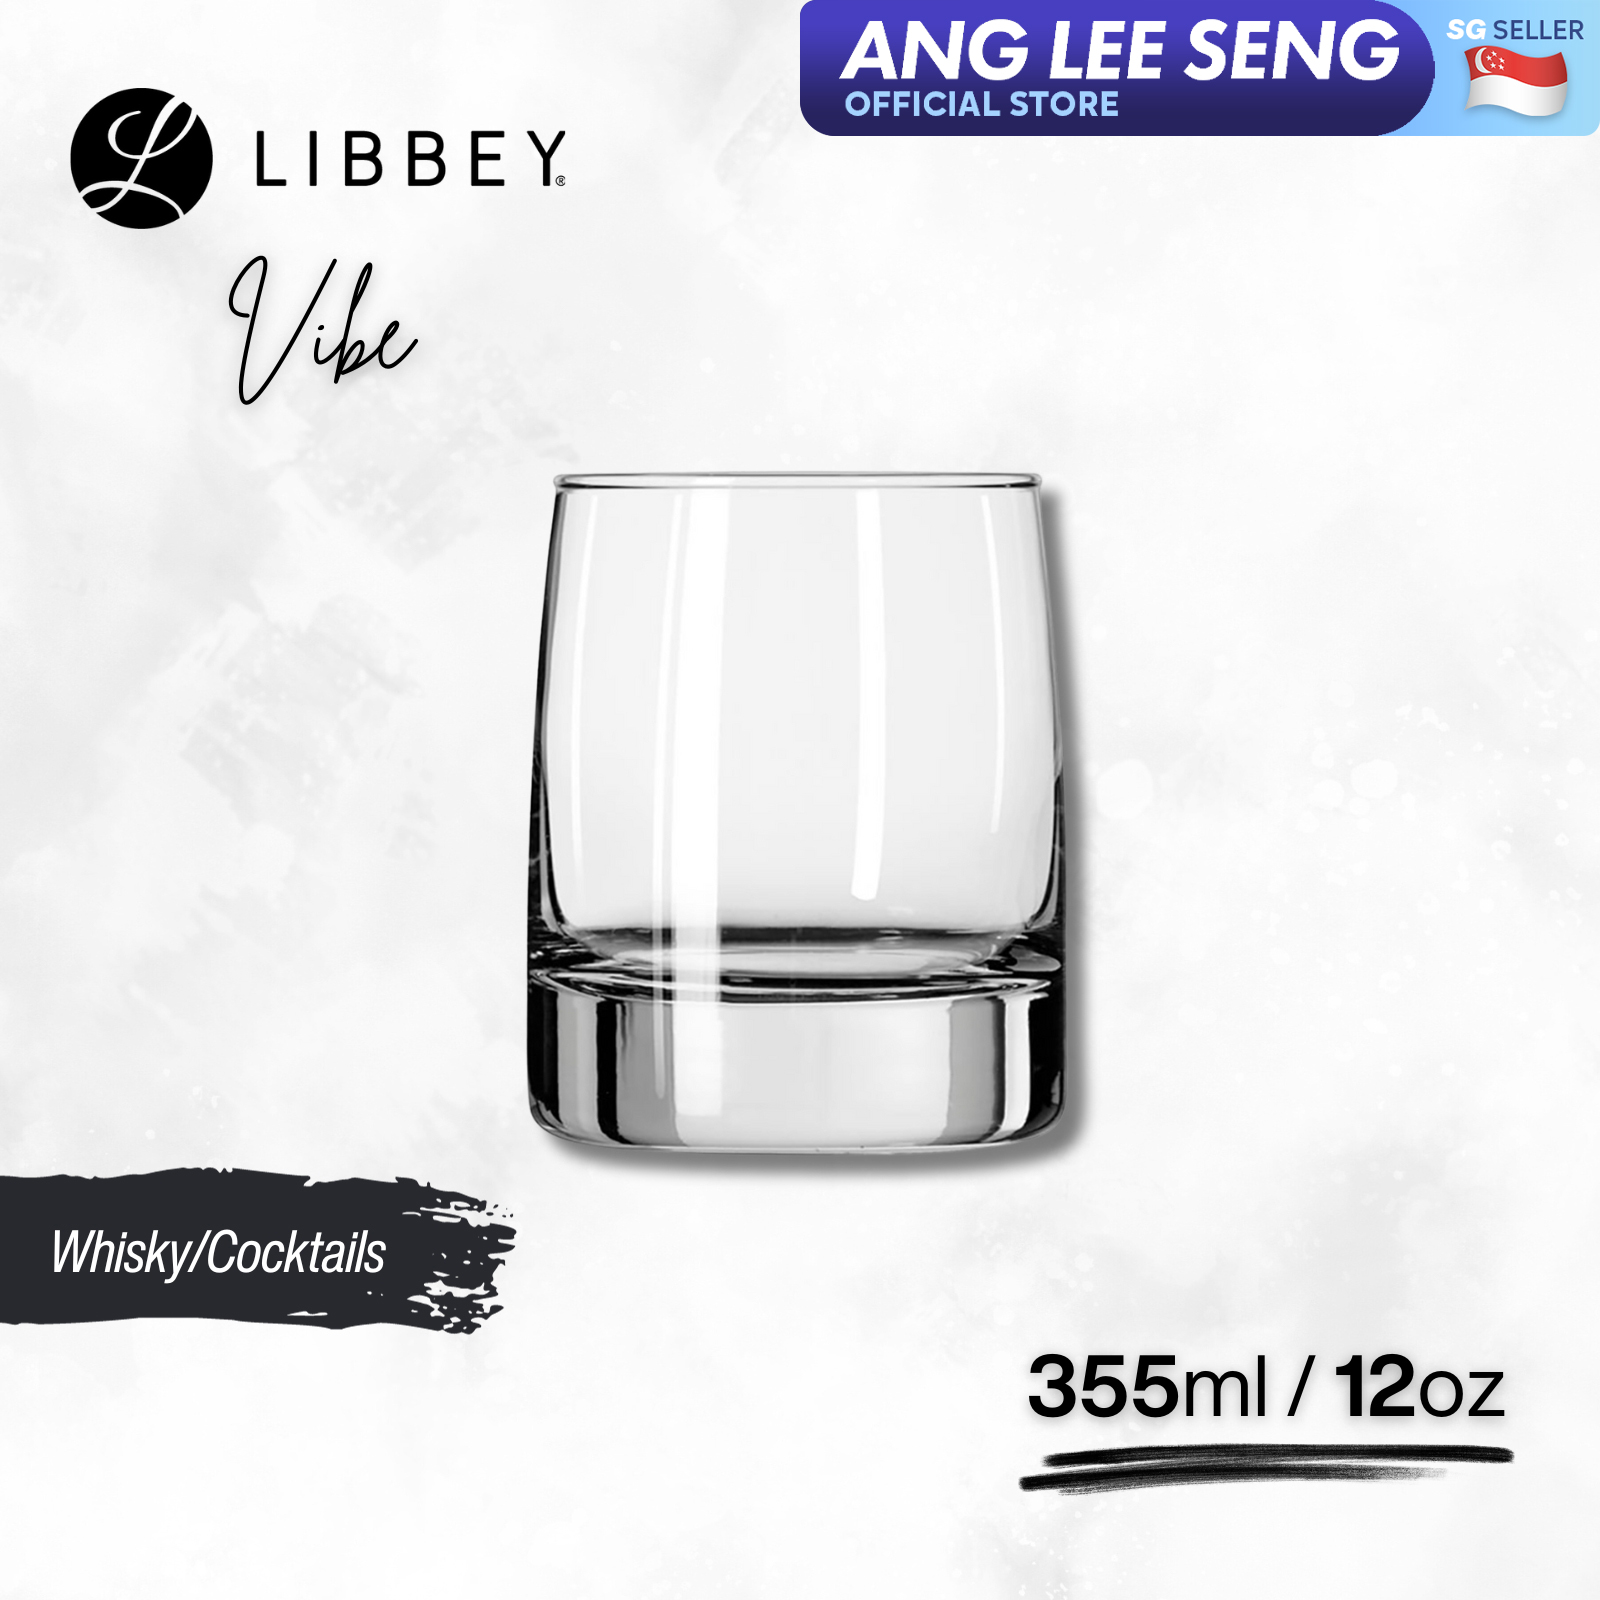 Libbey Vibe 2311 Double Old Fashioned Whisky Rocks Glass 355ml/12oz - Extra Thick Base, 2-pc Set